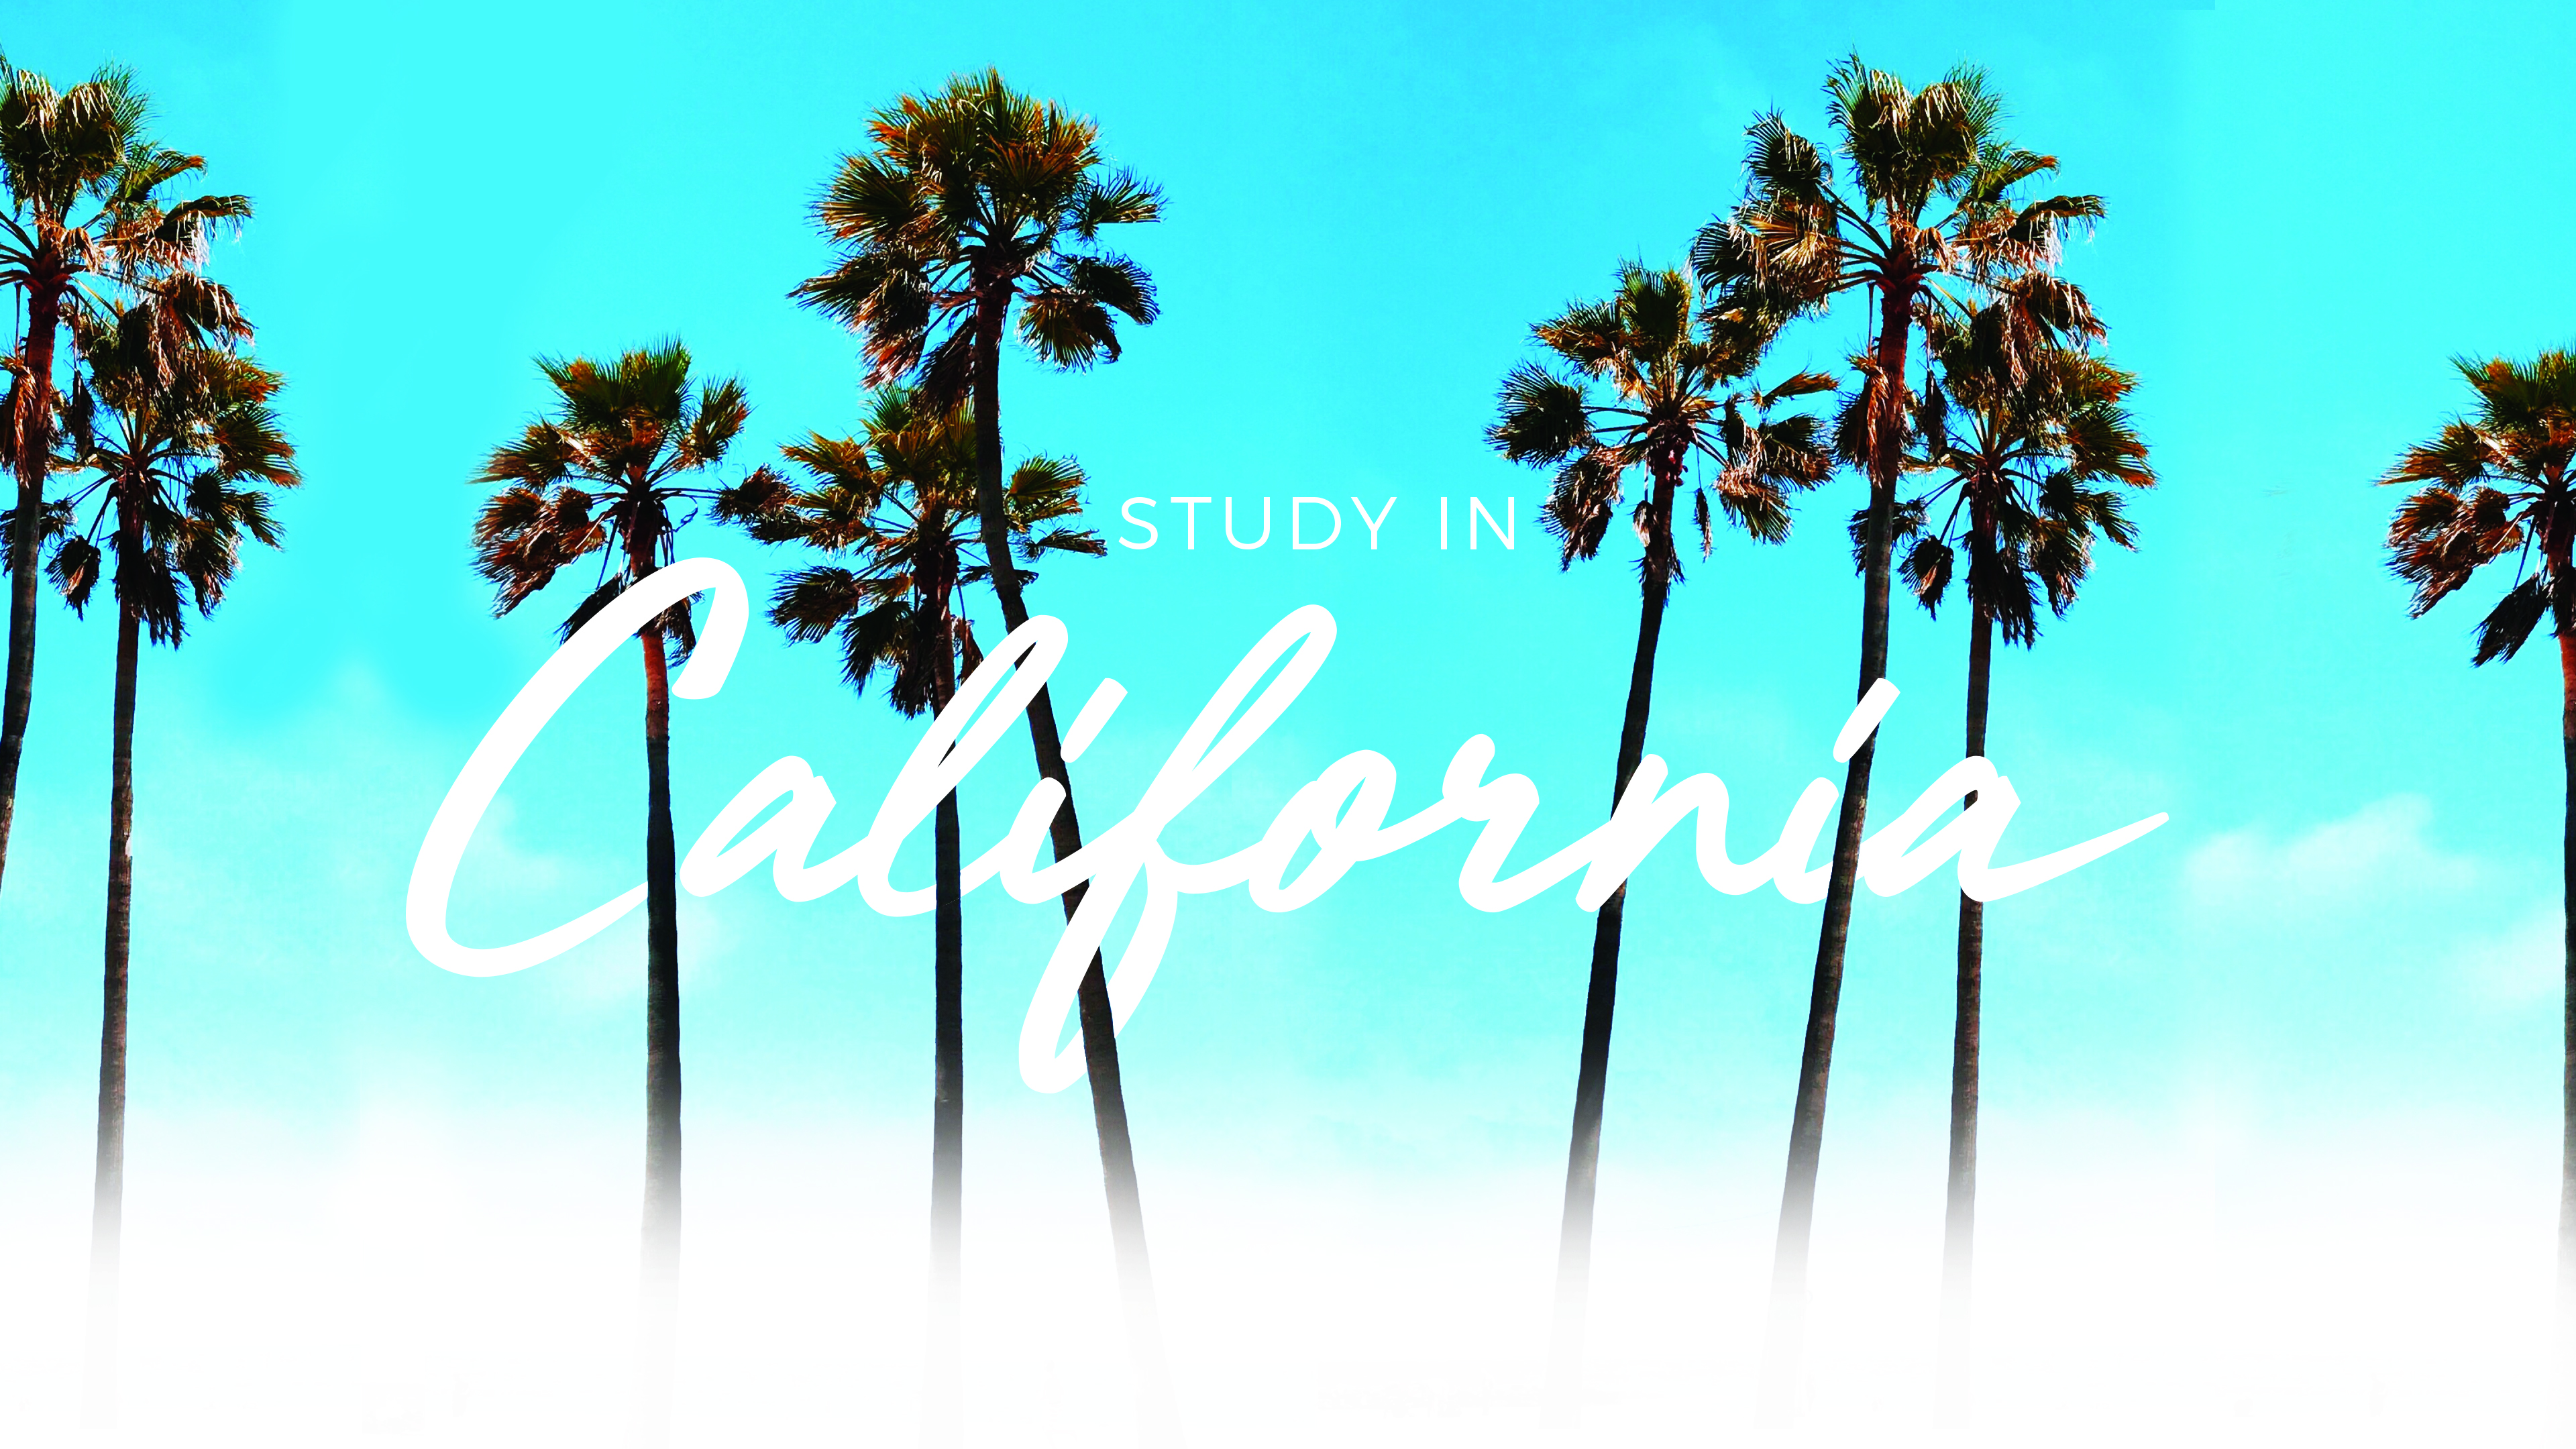 Study in California